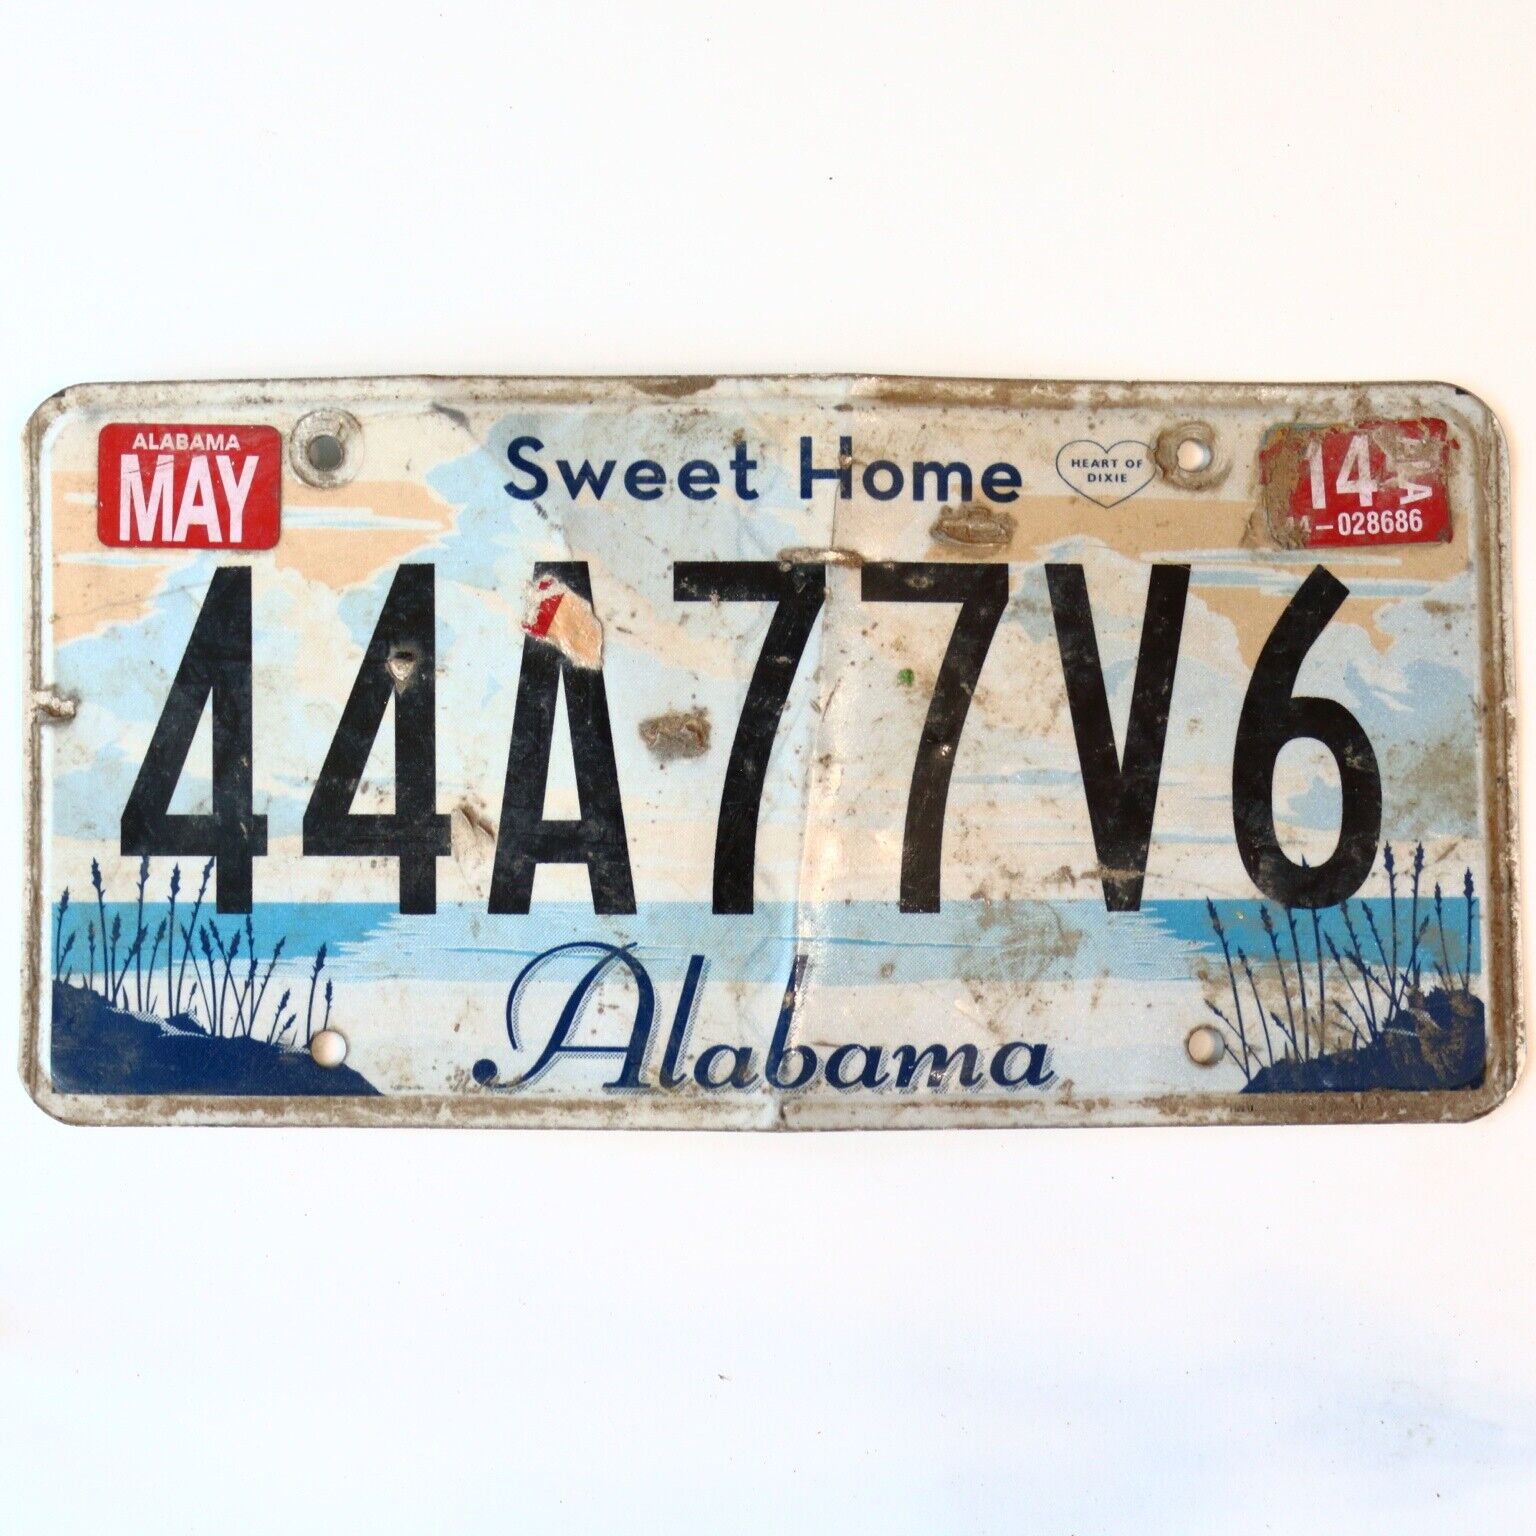 2014 United States Alabama Limestone County Passenger License Plate 44A77V6